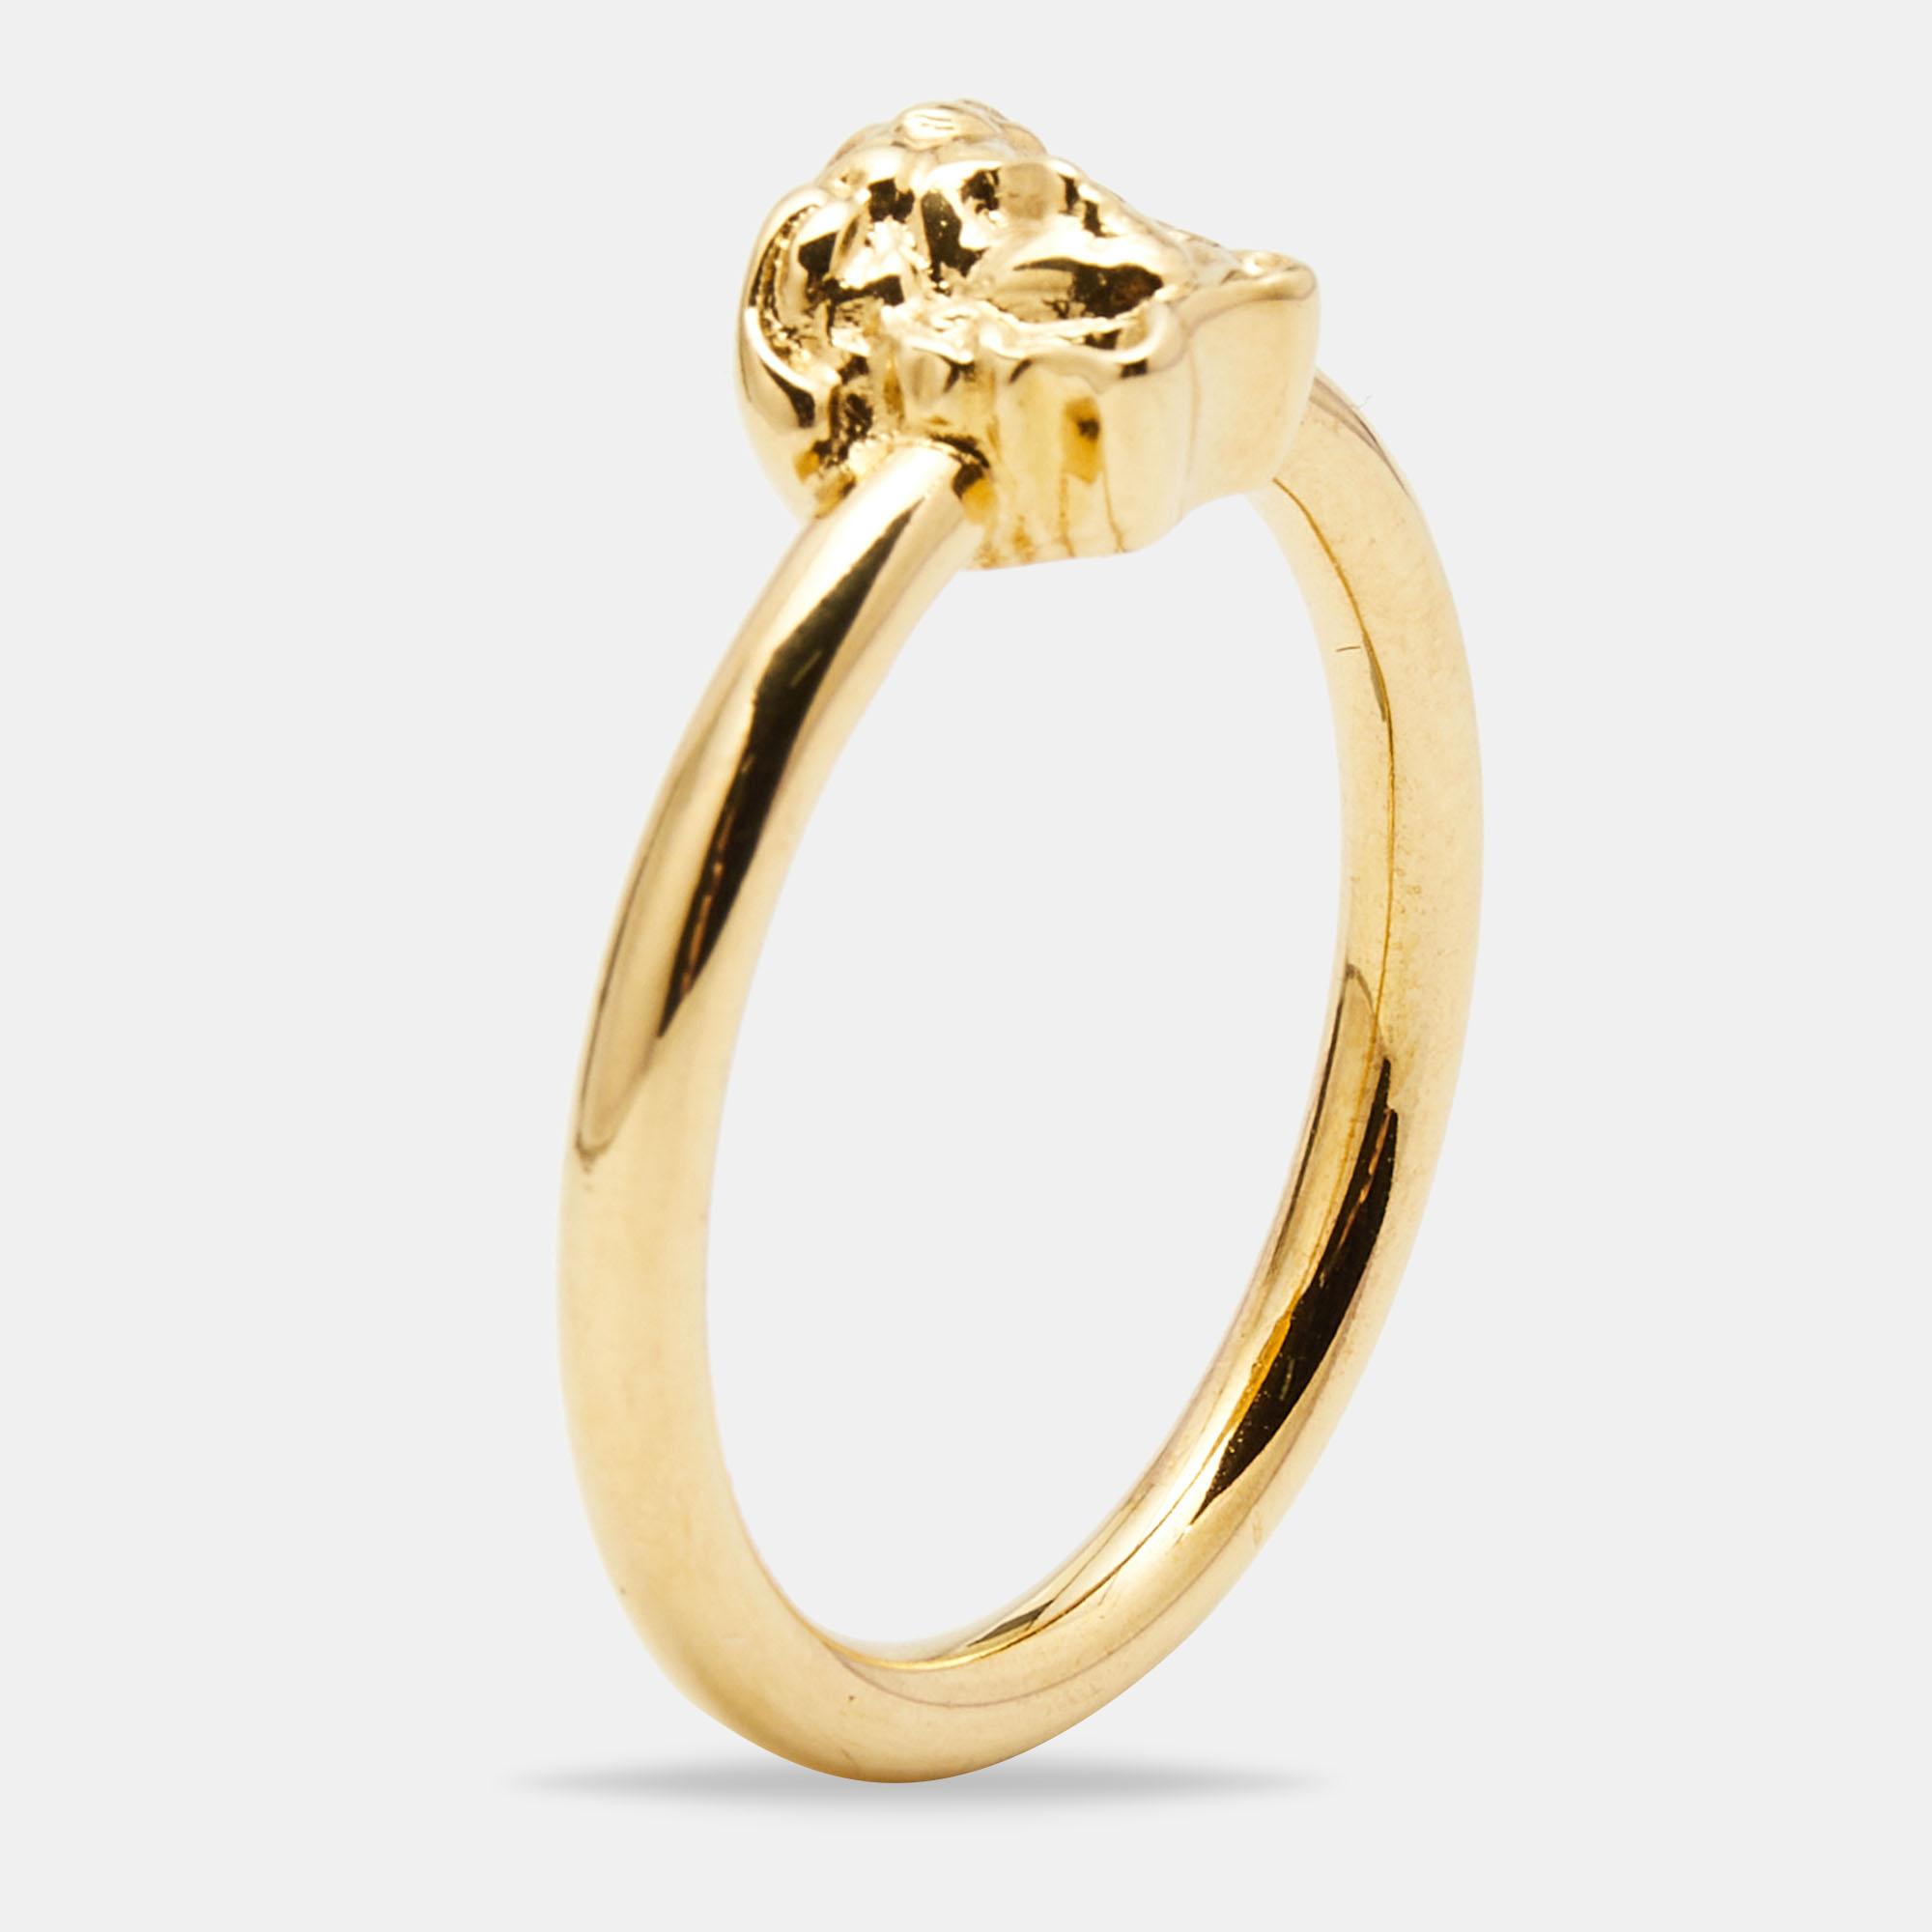 

Versace Medusa Gold Tone Ring Size